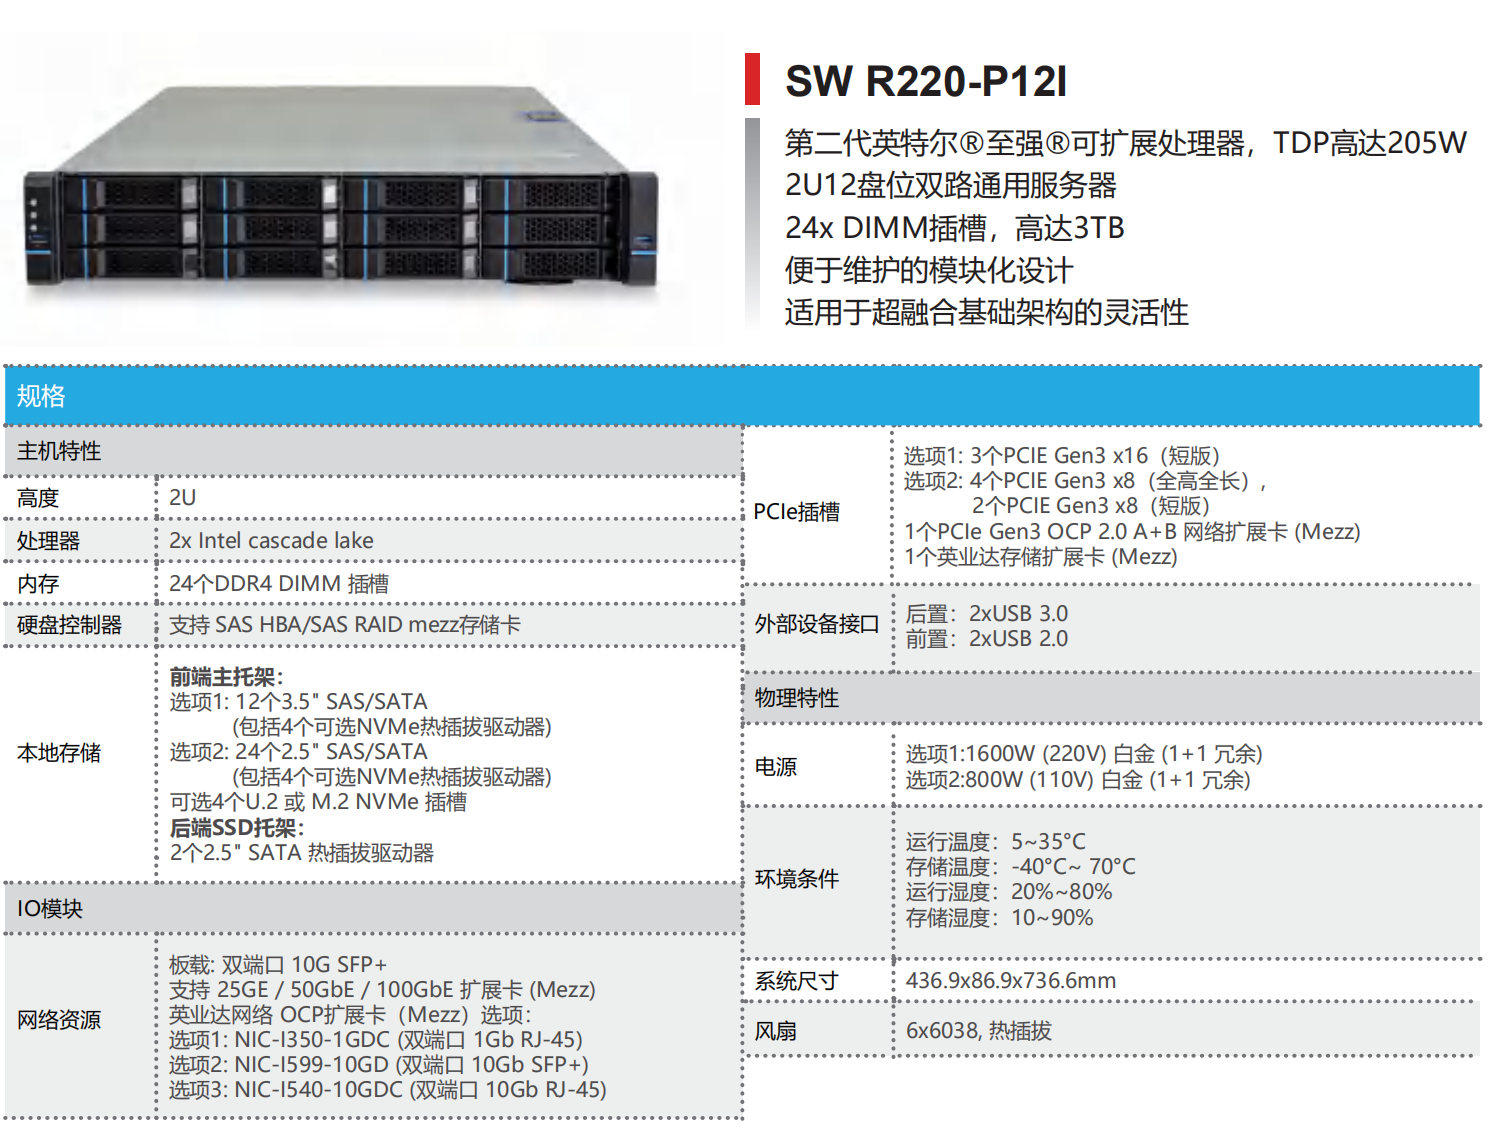 INTEL 平台双路服务器—SW R220-P12I